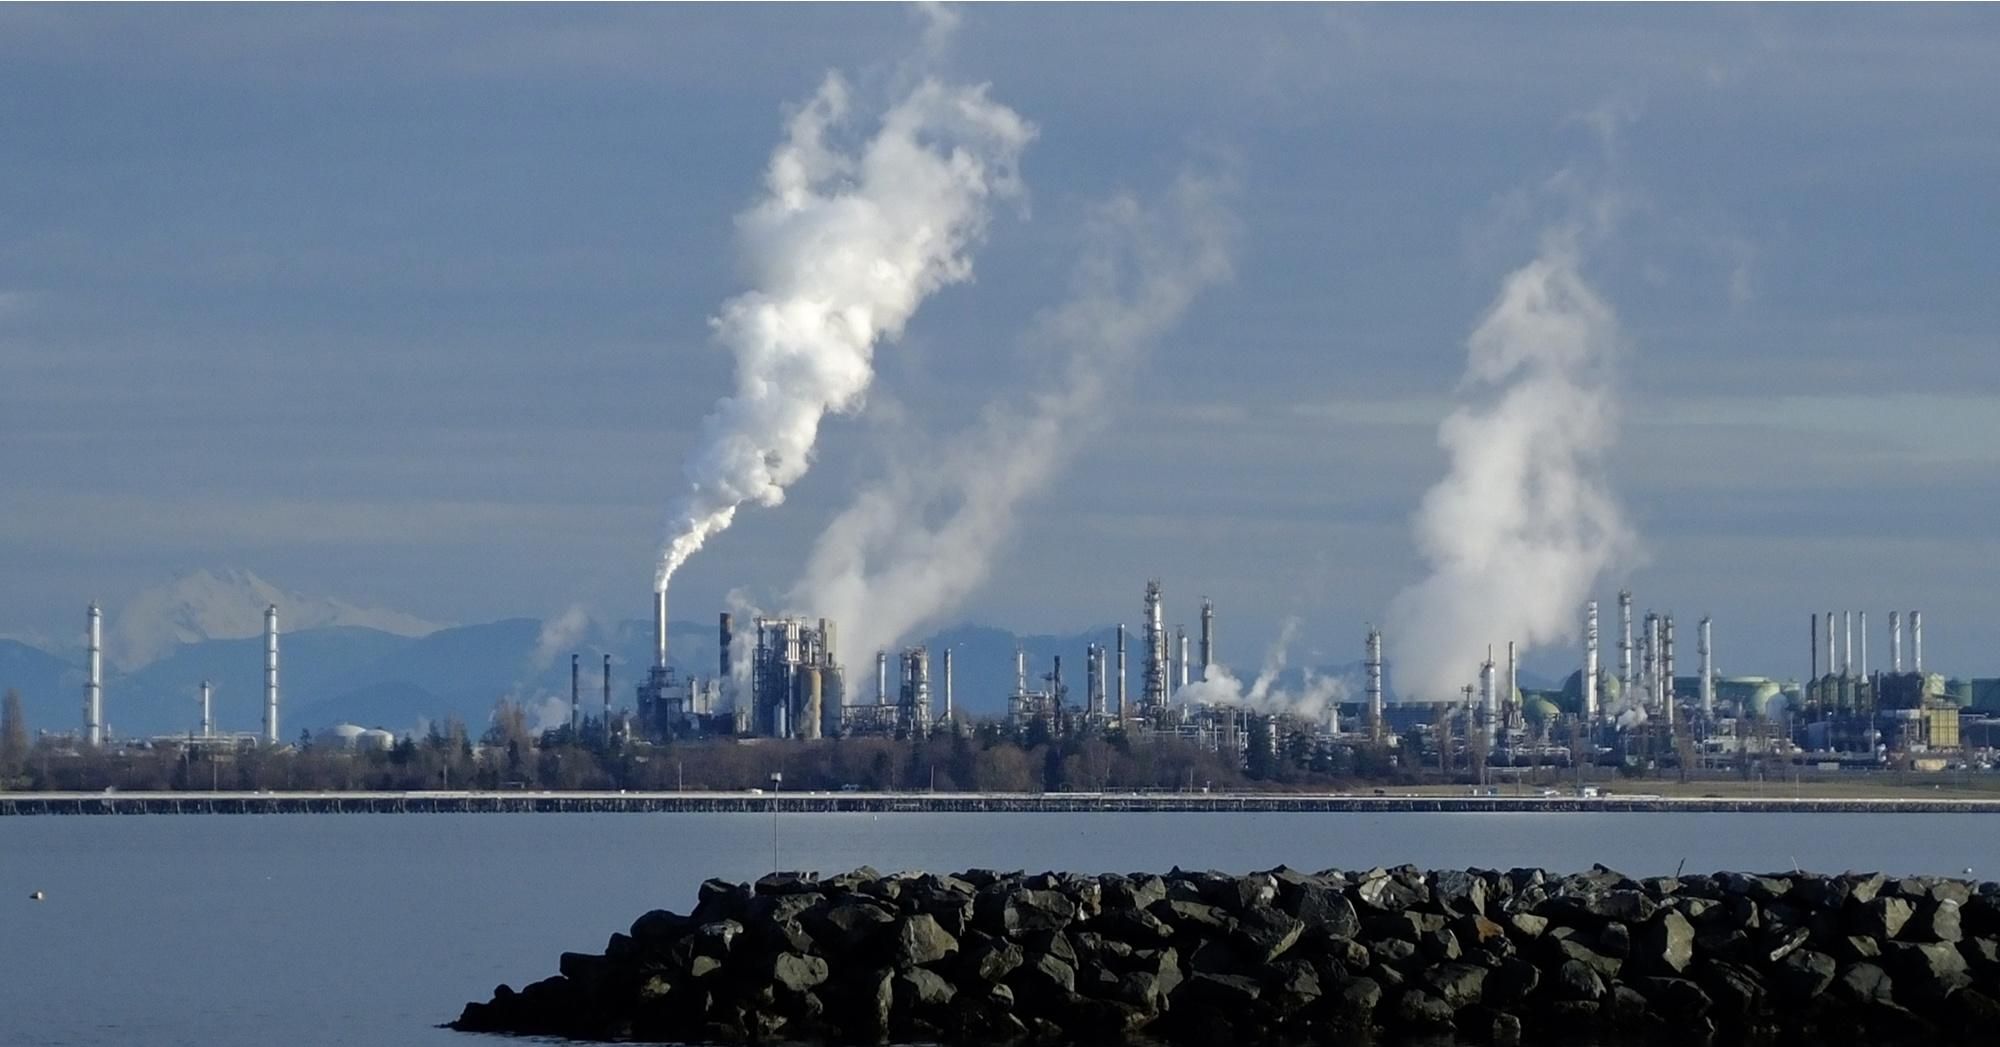 View of the Tesoro Anacortes oil refinery in Skagit County, Washington on January 15, 2017. (Photo: Linda, Fortuna future/Flickr/cc)